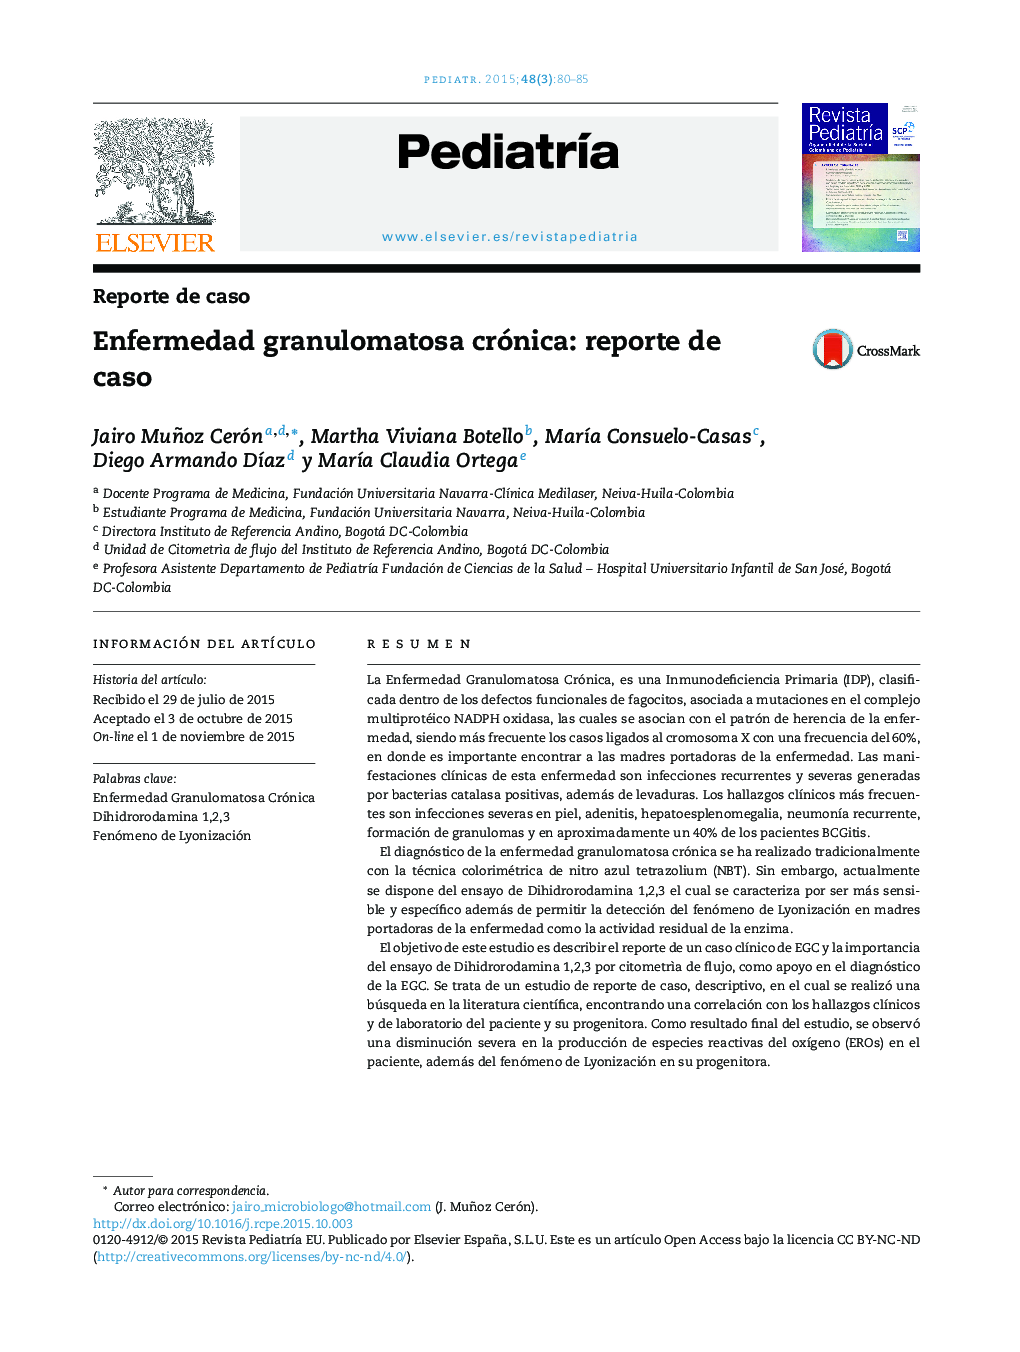 بیماری مزمن گرانولوماتوز: گزارش مورد 